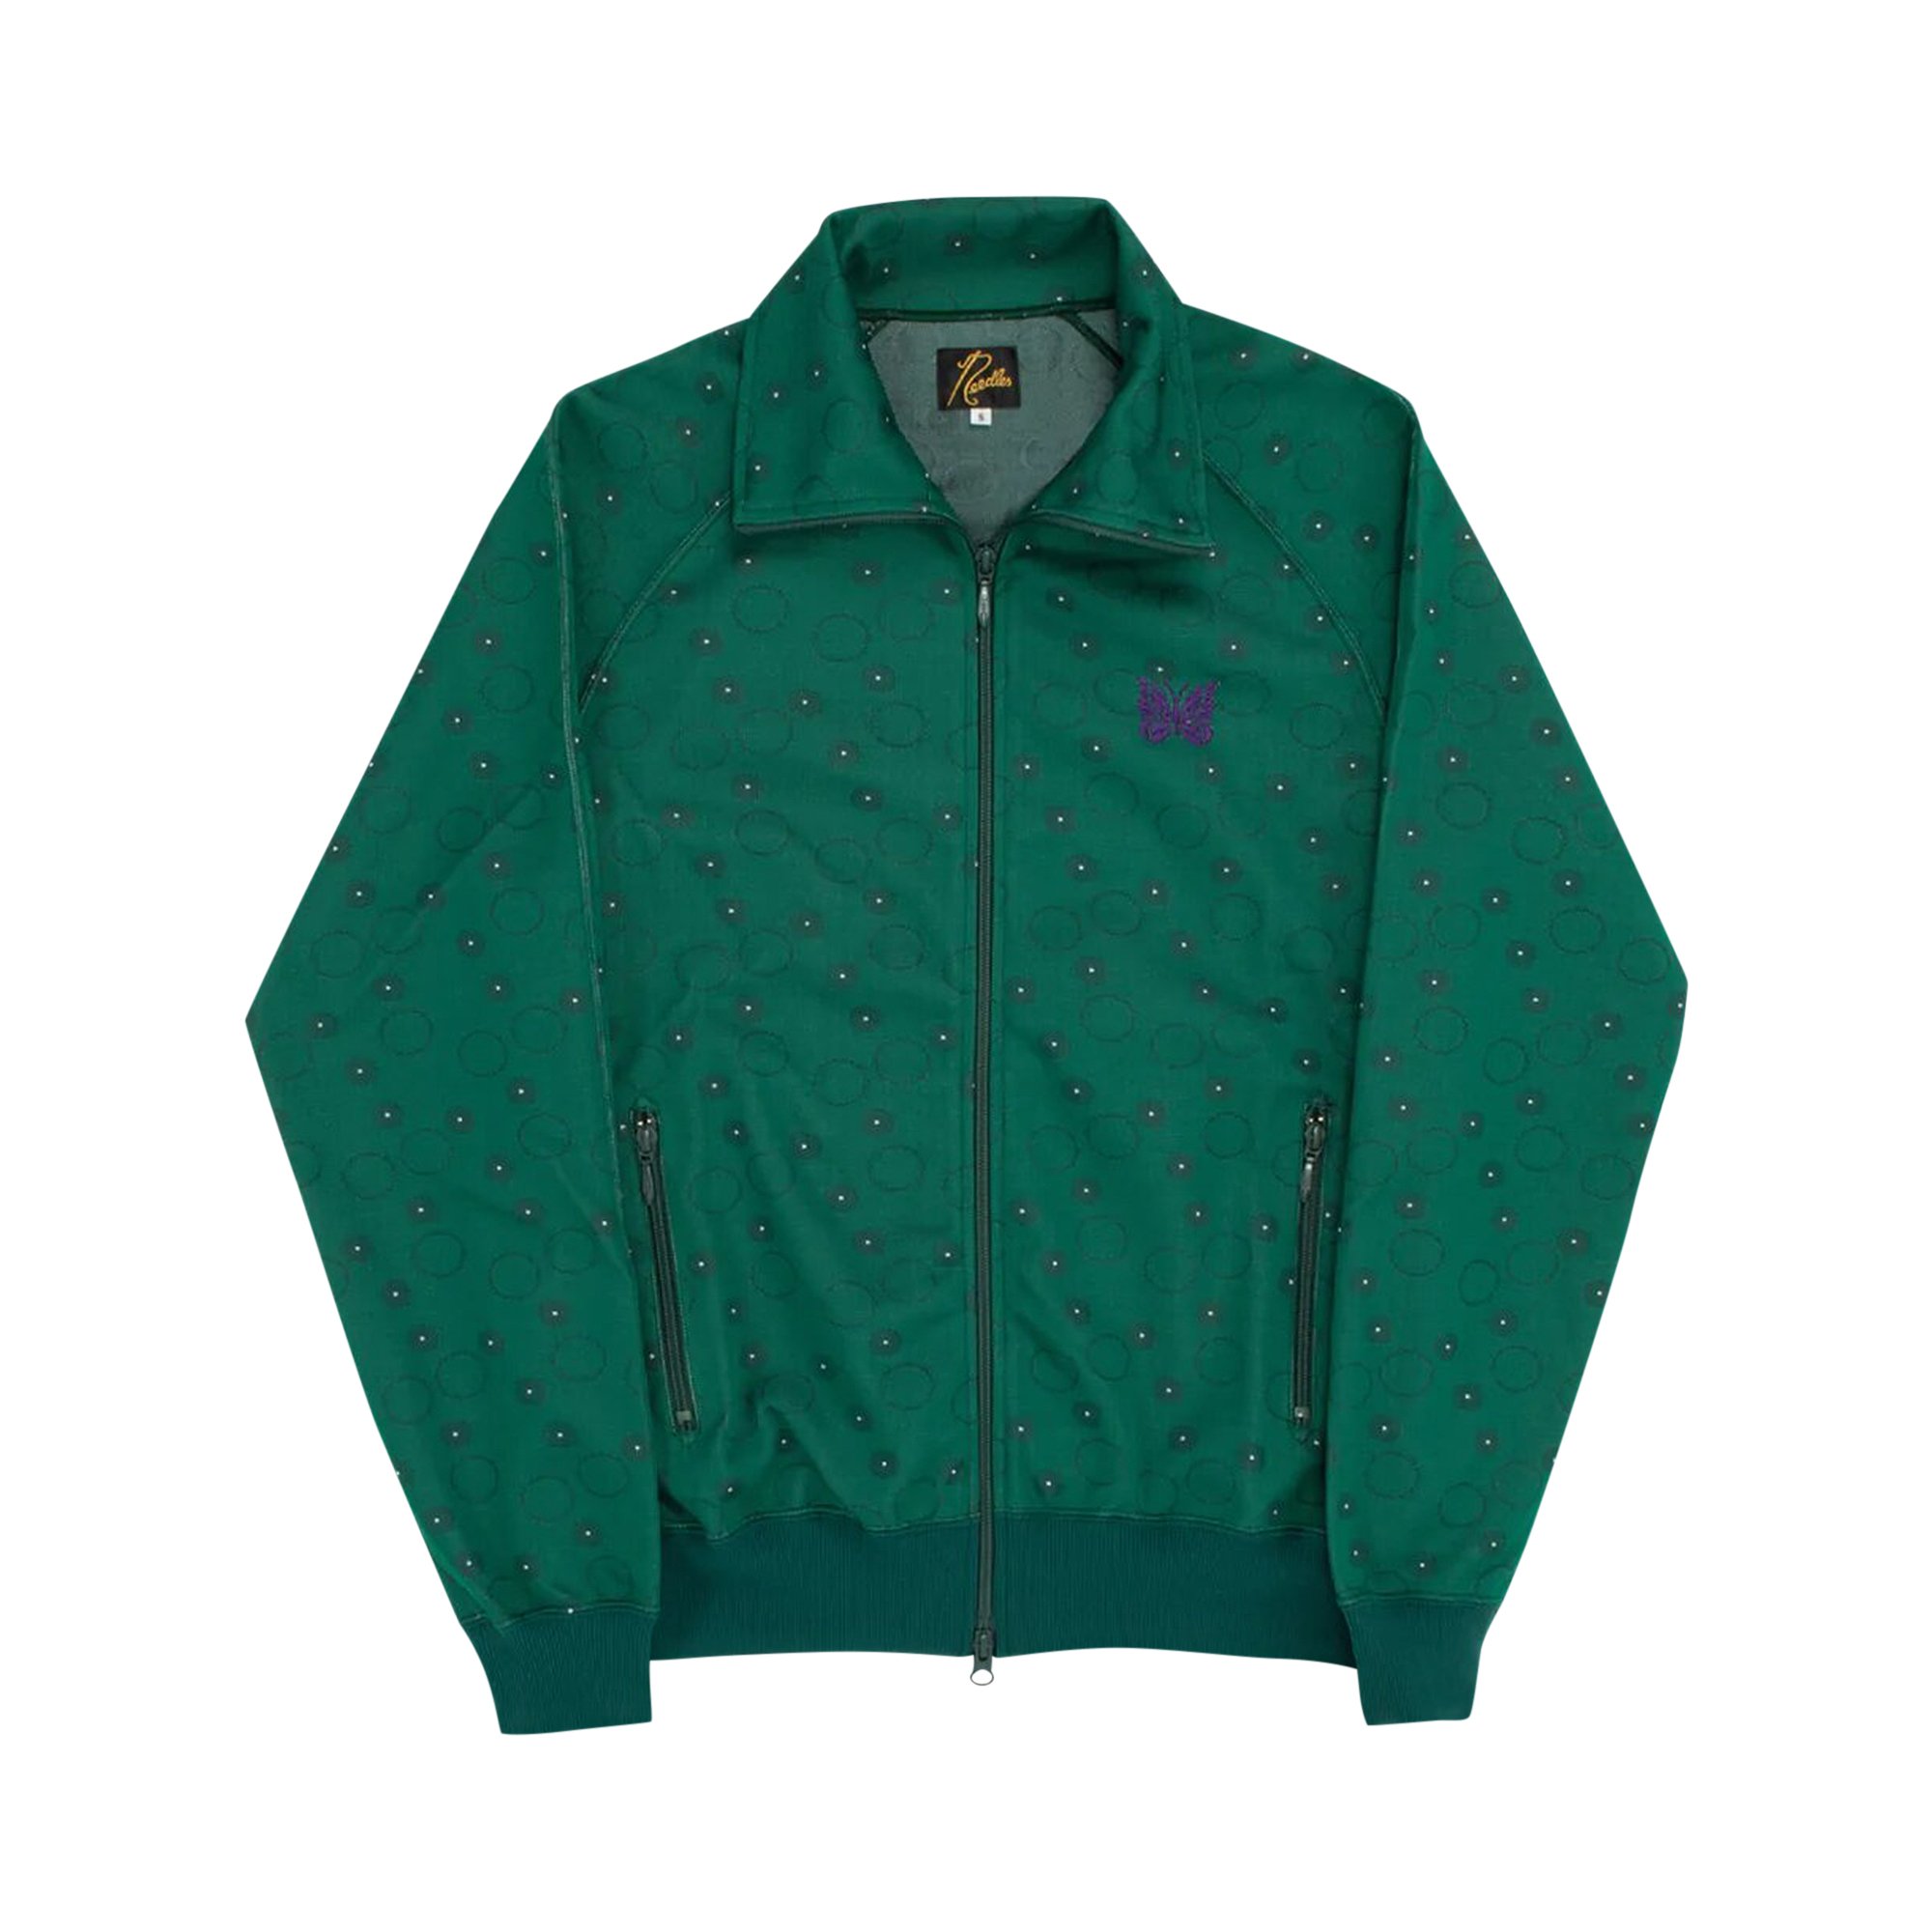 Lサイズ needles track jacket green 21aw